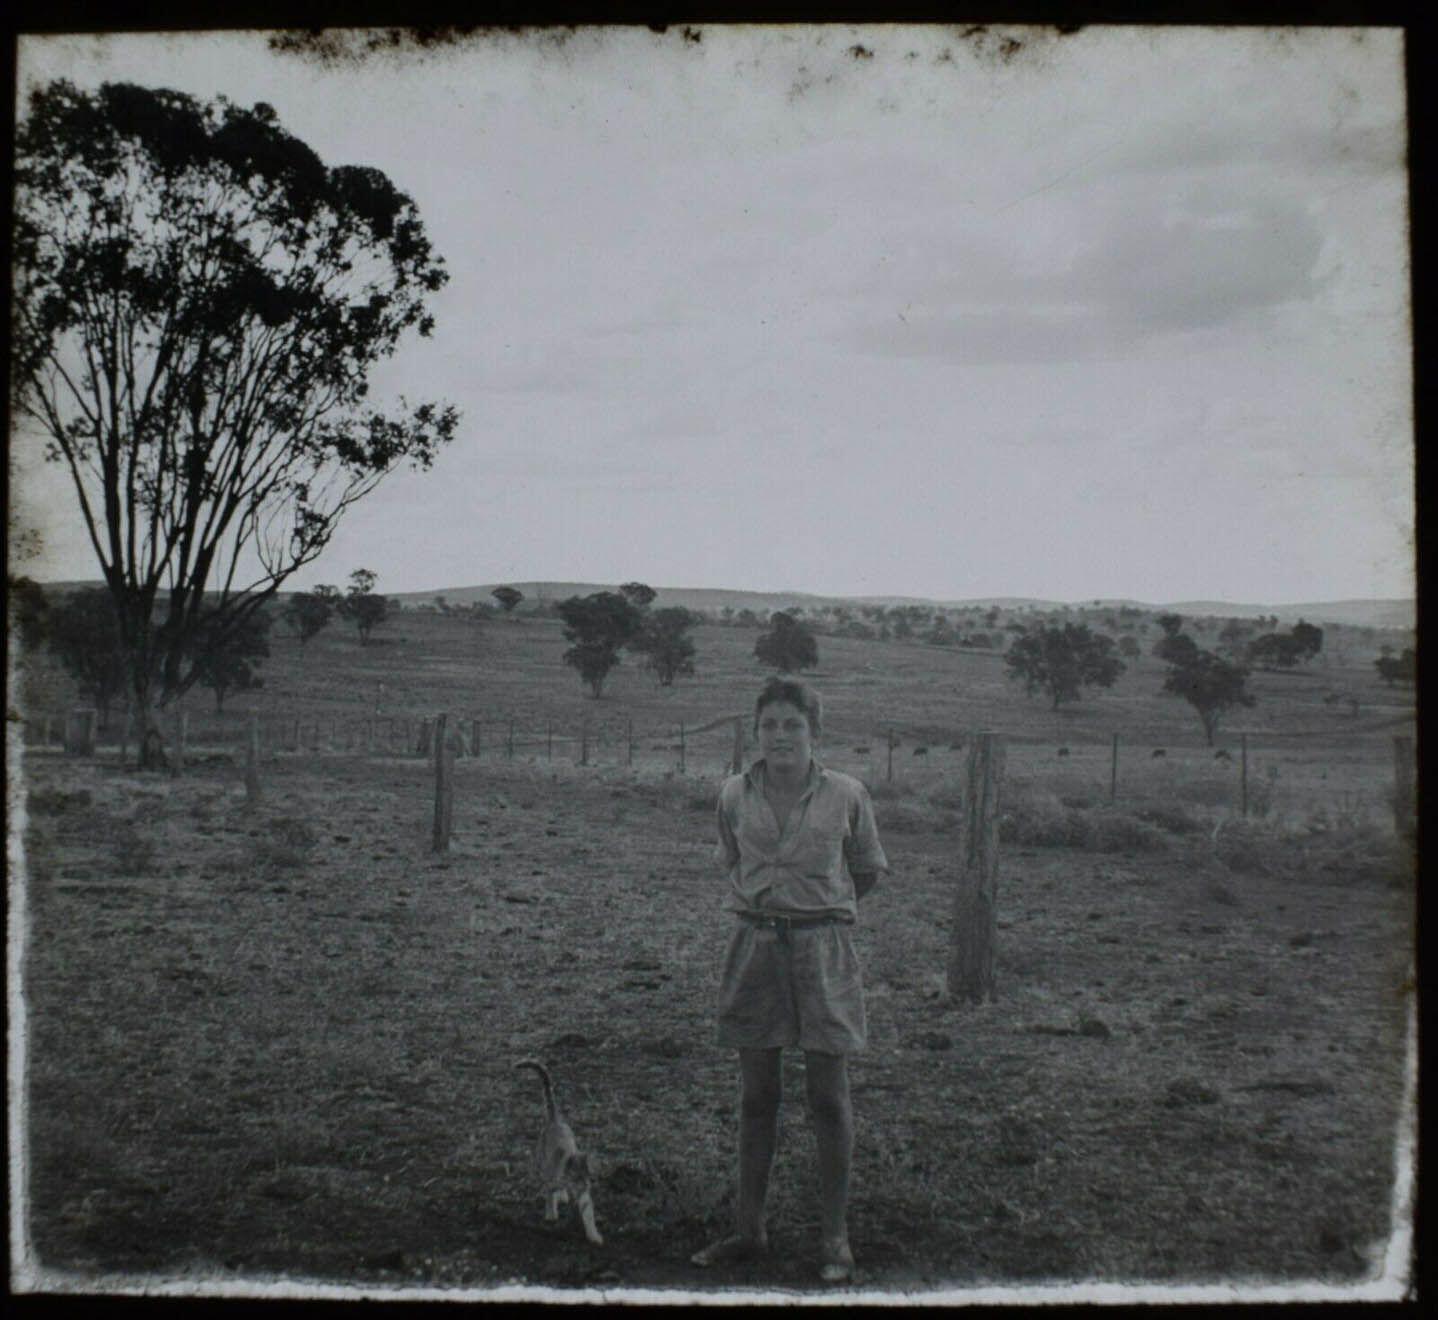 Peter Blundell at Fairbridge Farm School, Molong, NSW, Australia in the 1940s